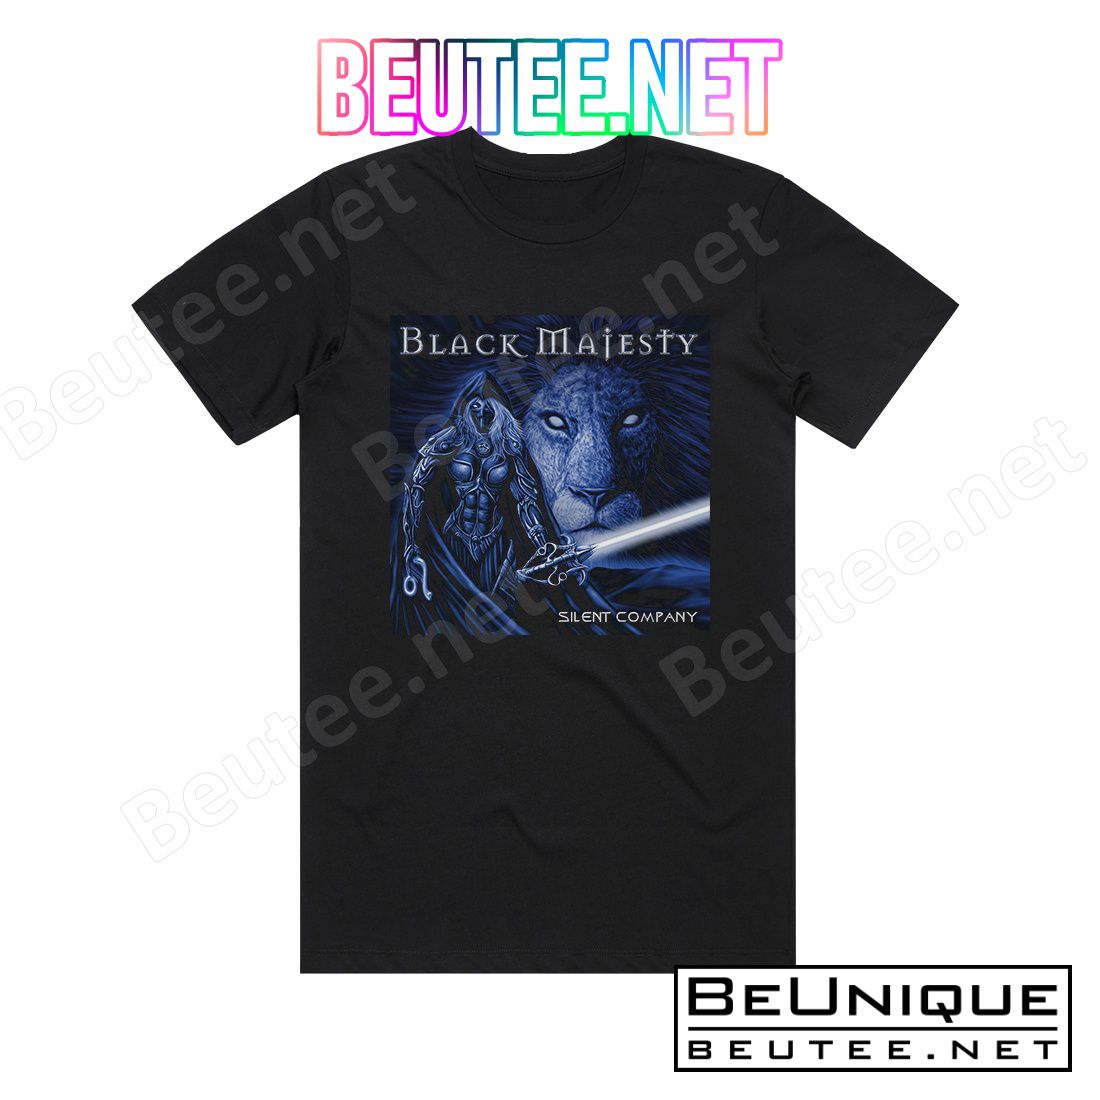 Black Majesty Silent Company Album Cover T-Shirt